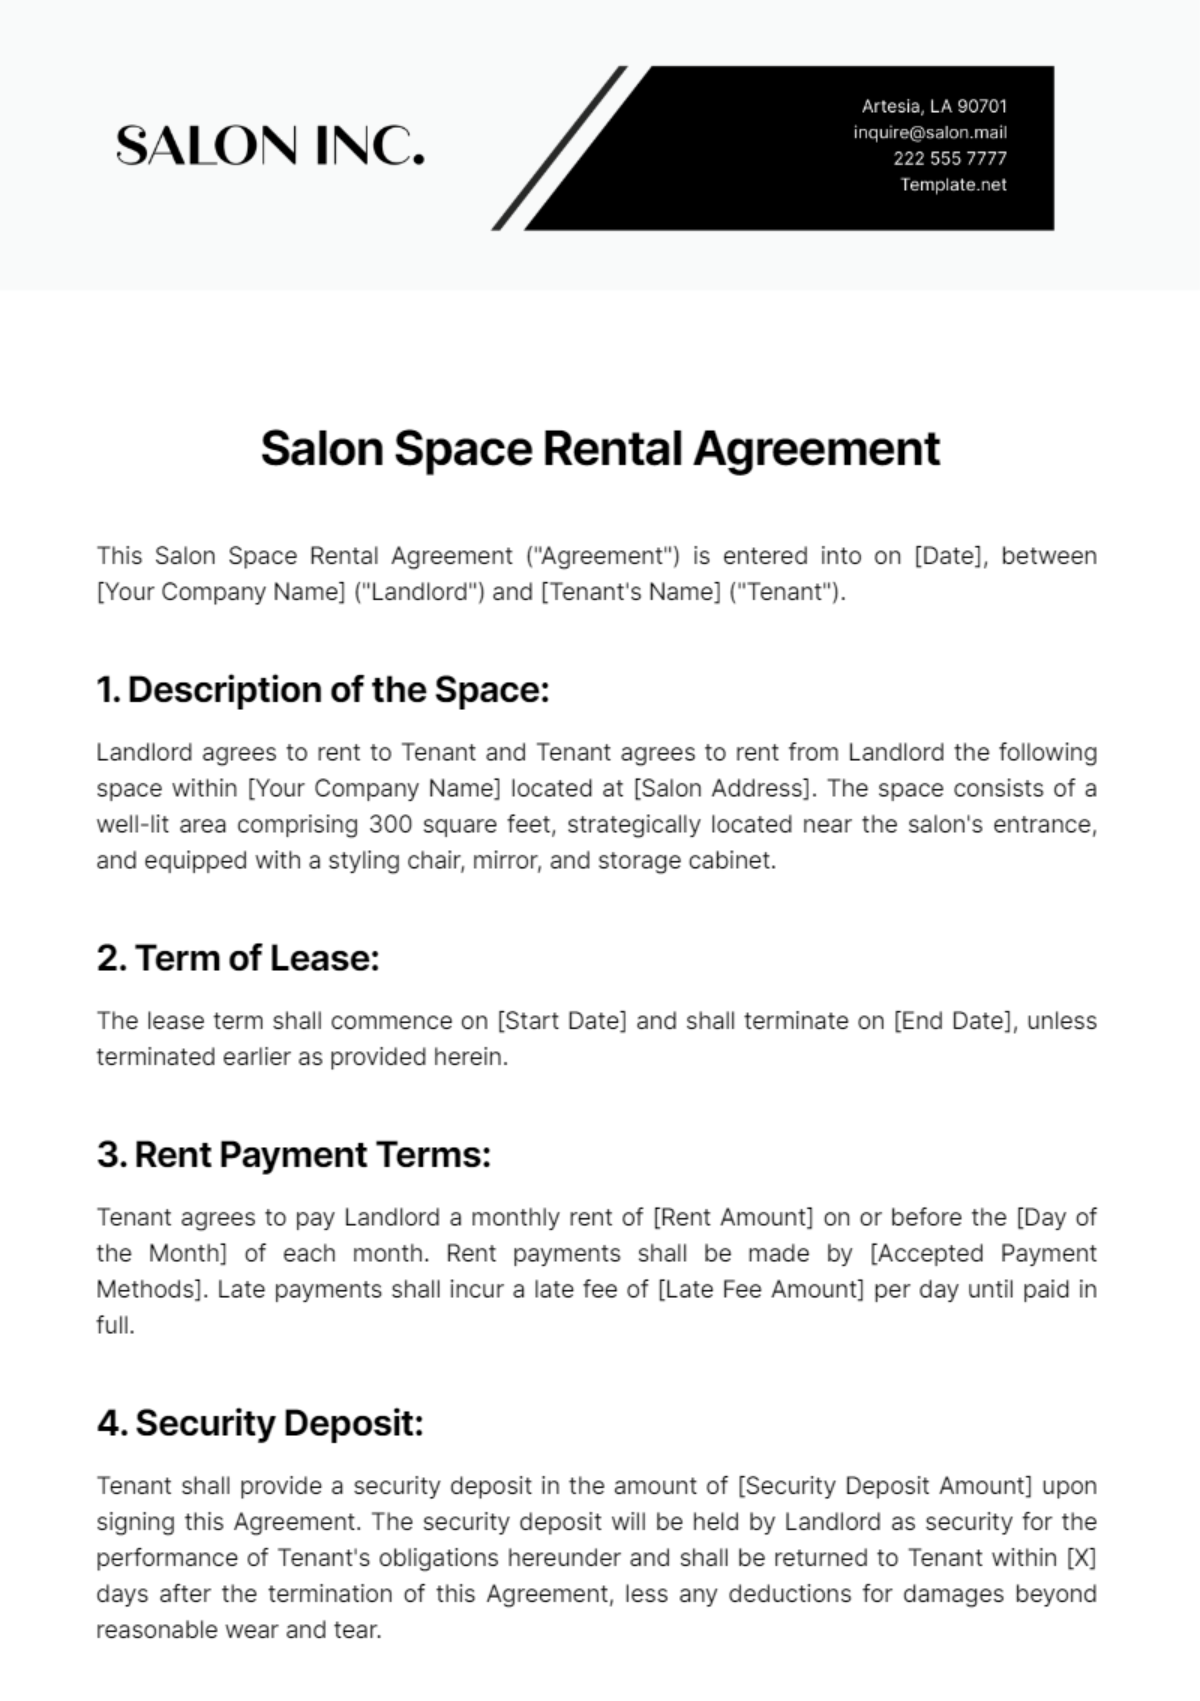 Salon Space Rental Agreement Template